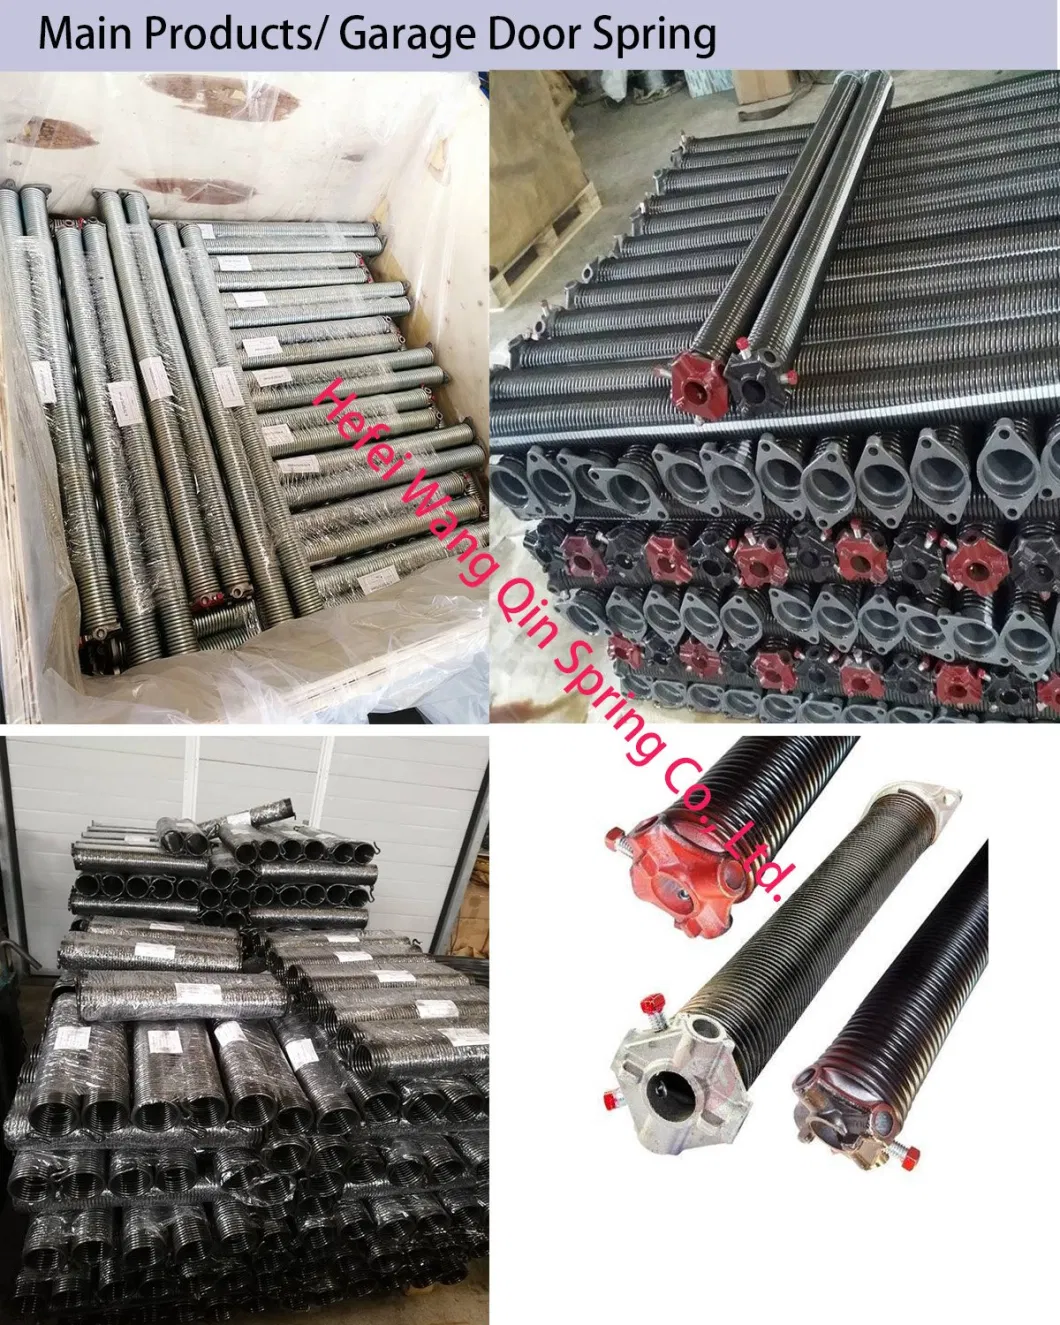 China Factory Black and Galvanized Steel Garage Door Spring